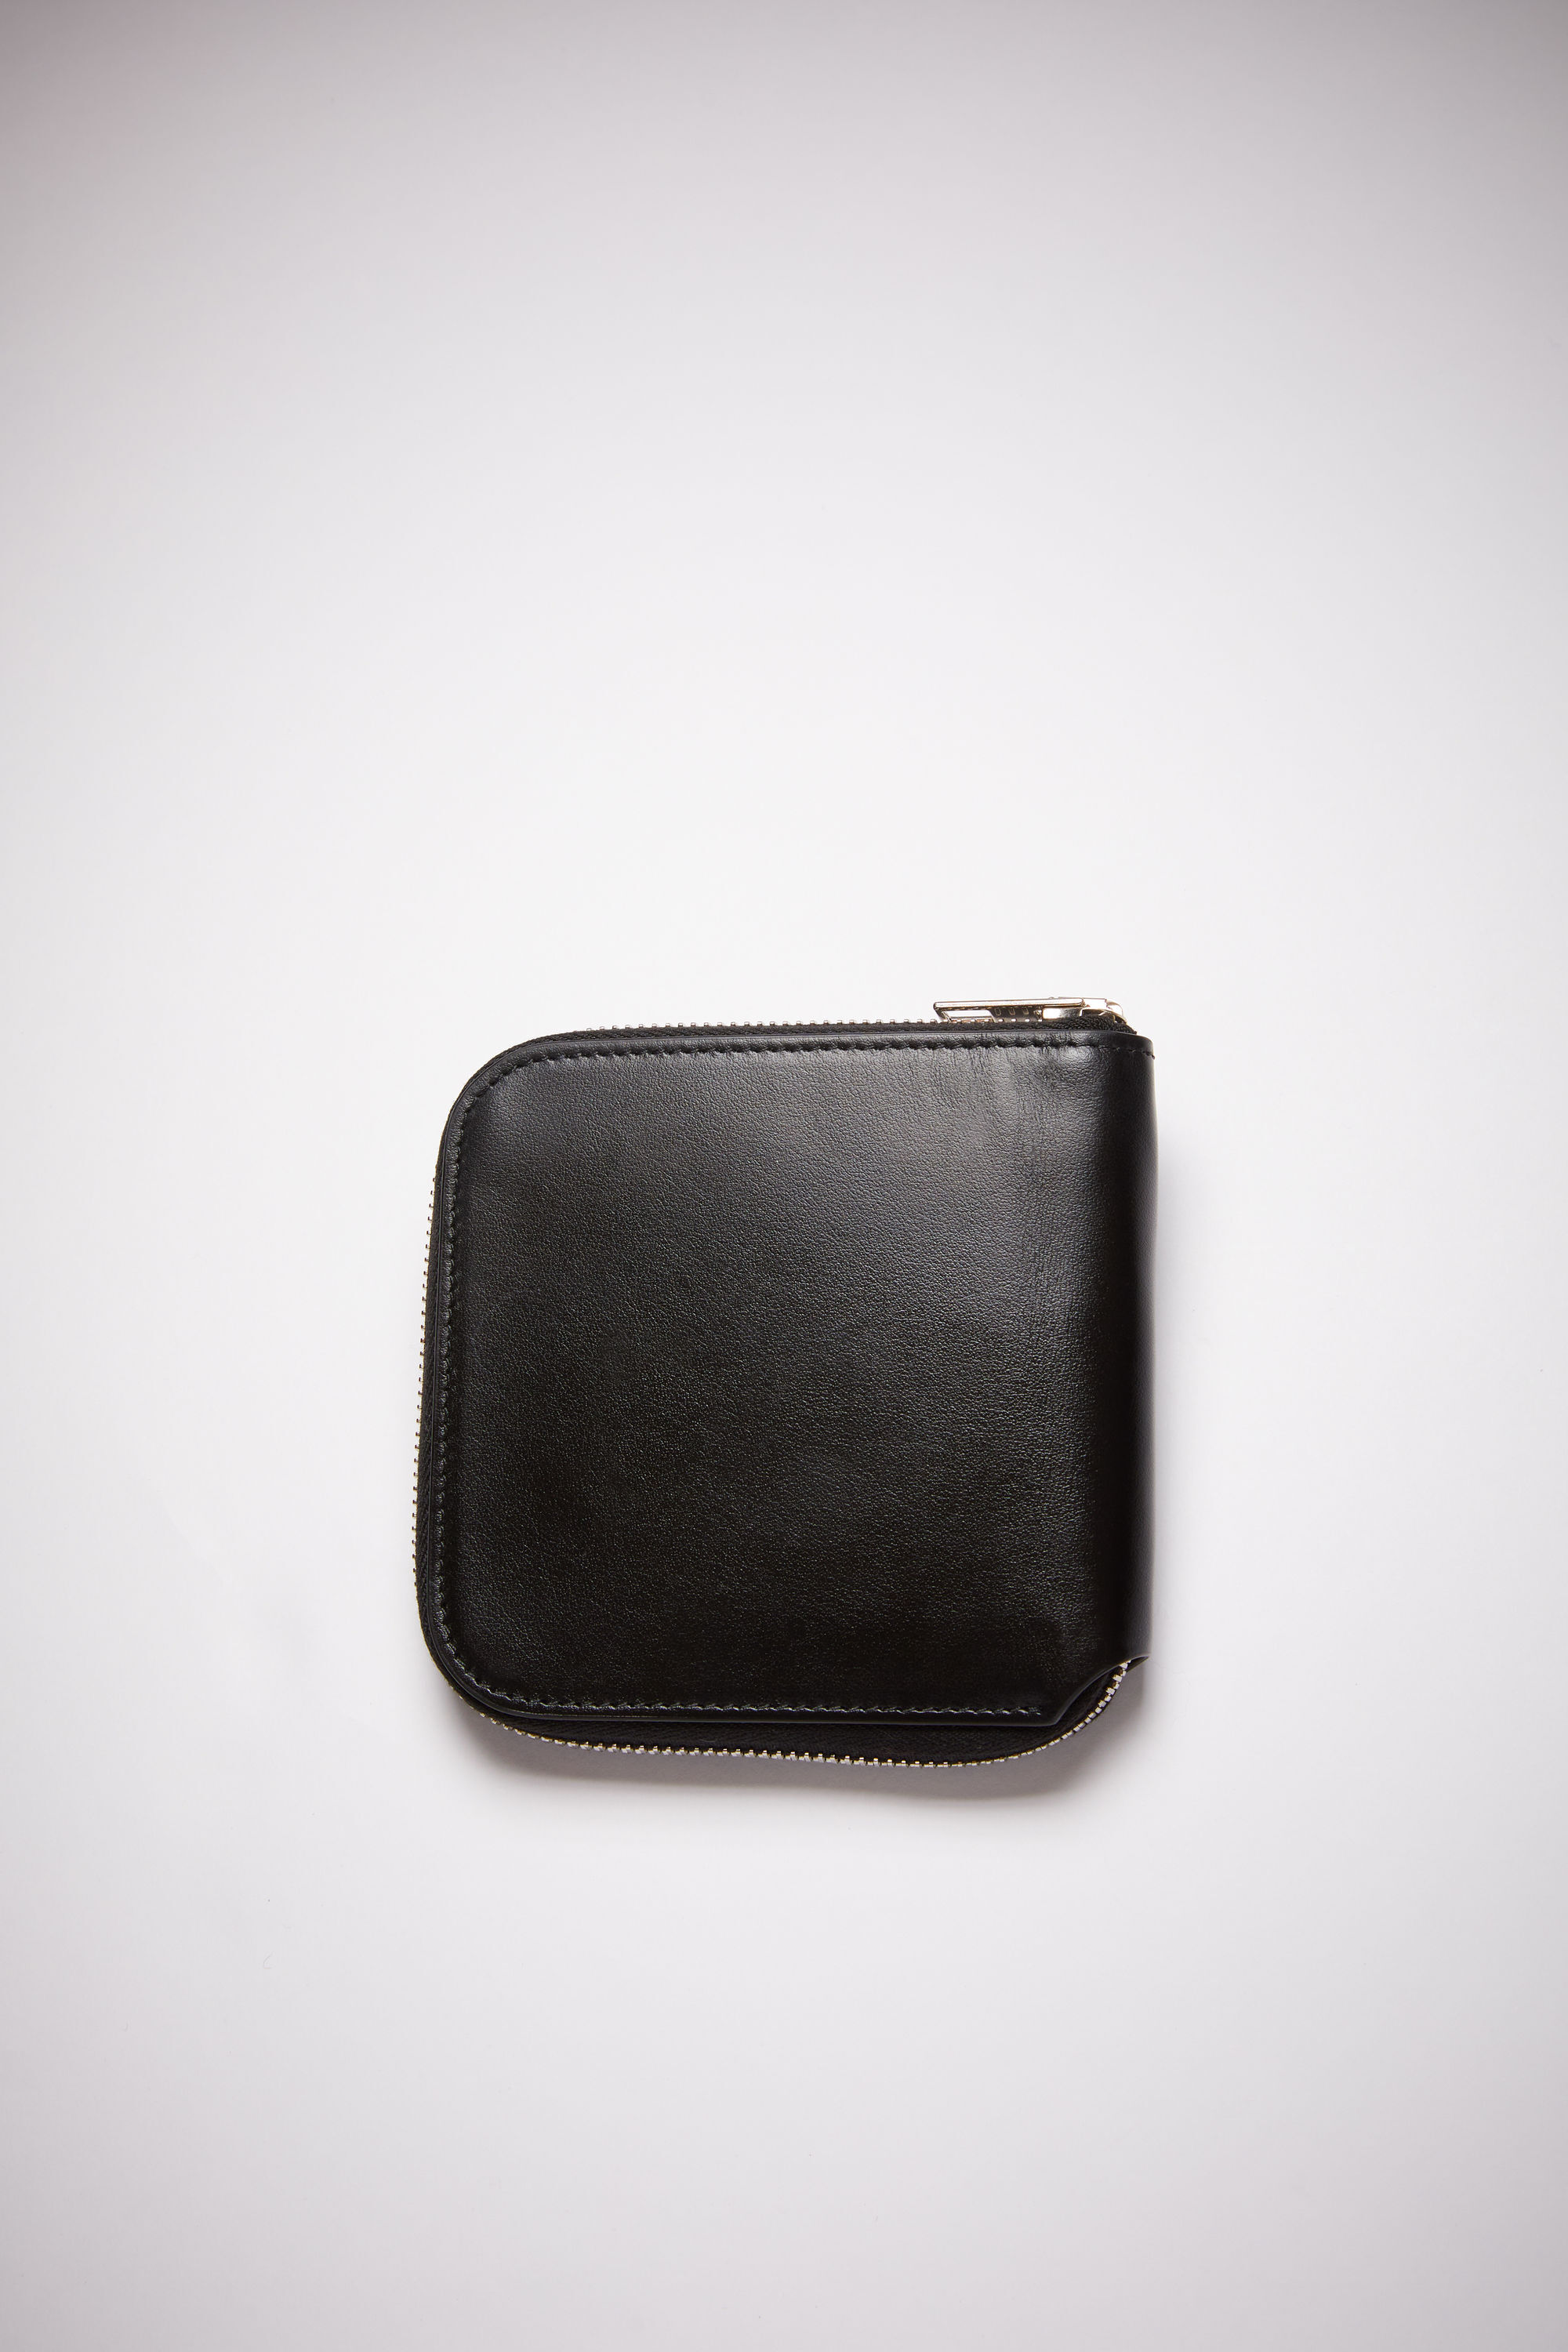 Acne Studios - Zippered wallet - Black